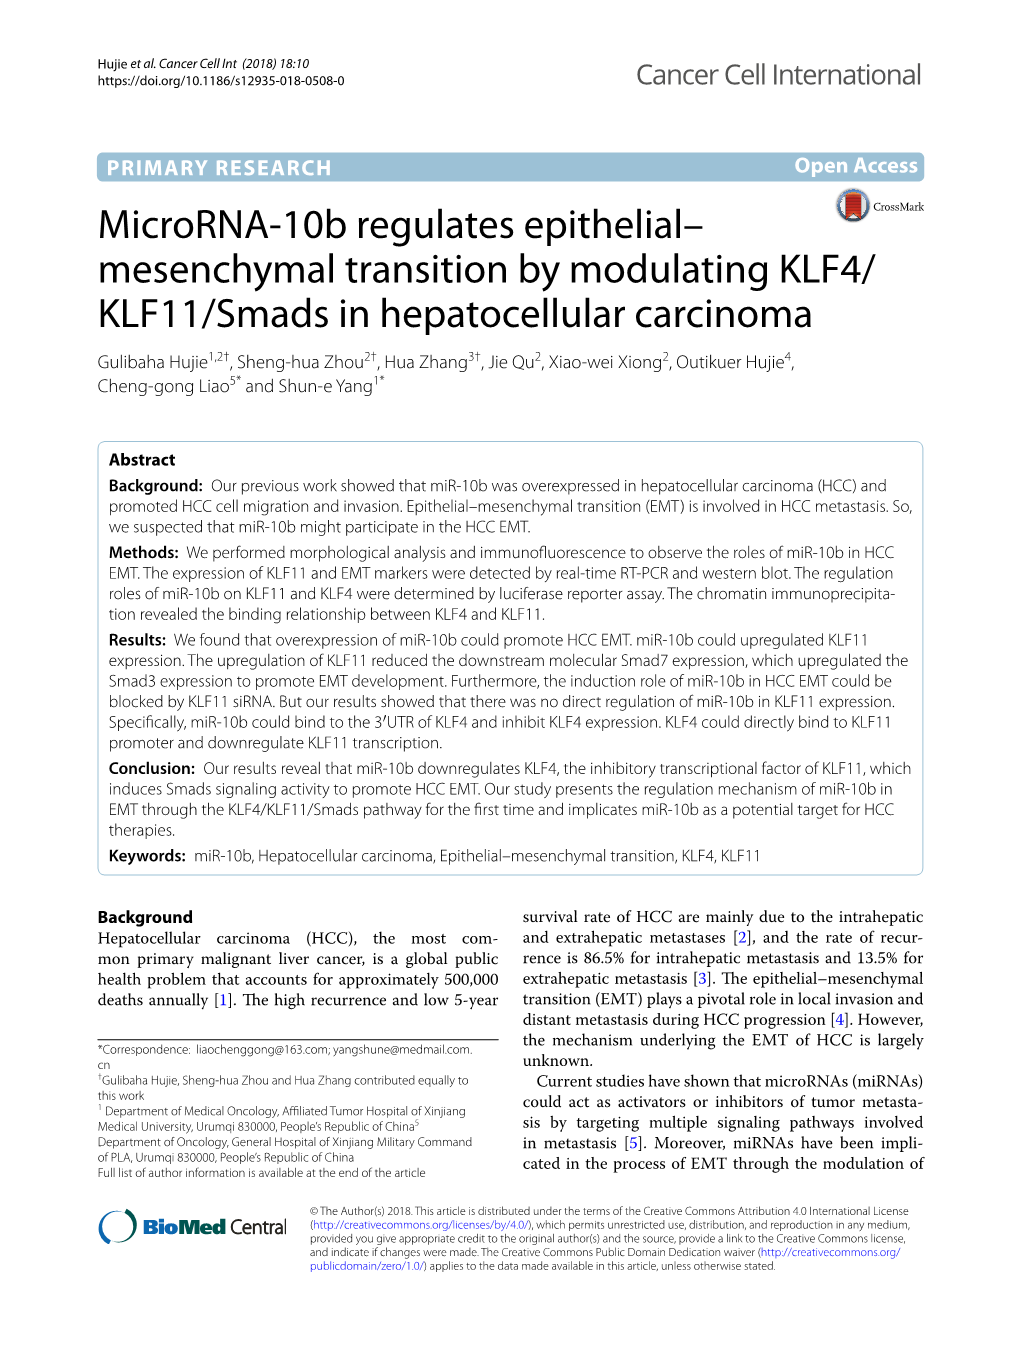 Microrna-10B Regulates Epithelial–Mesenchymal Transition by 11